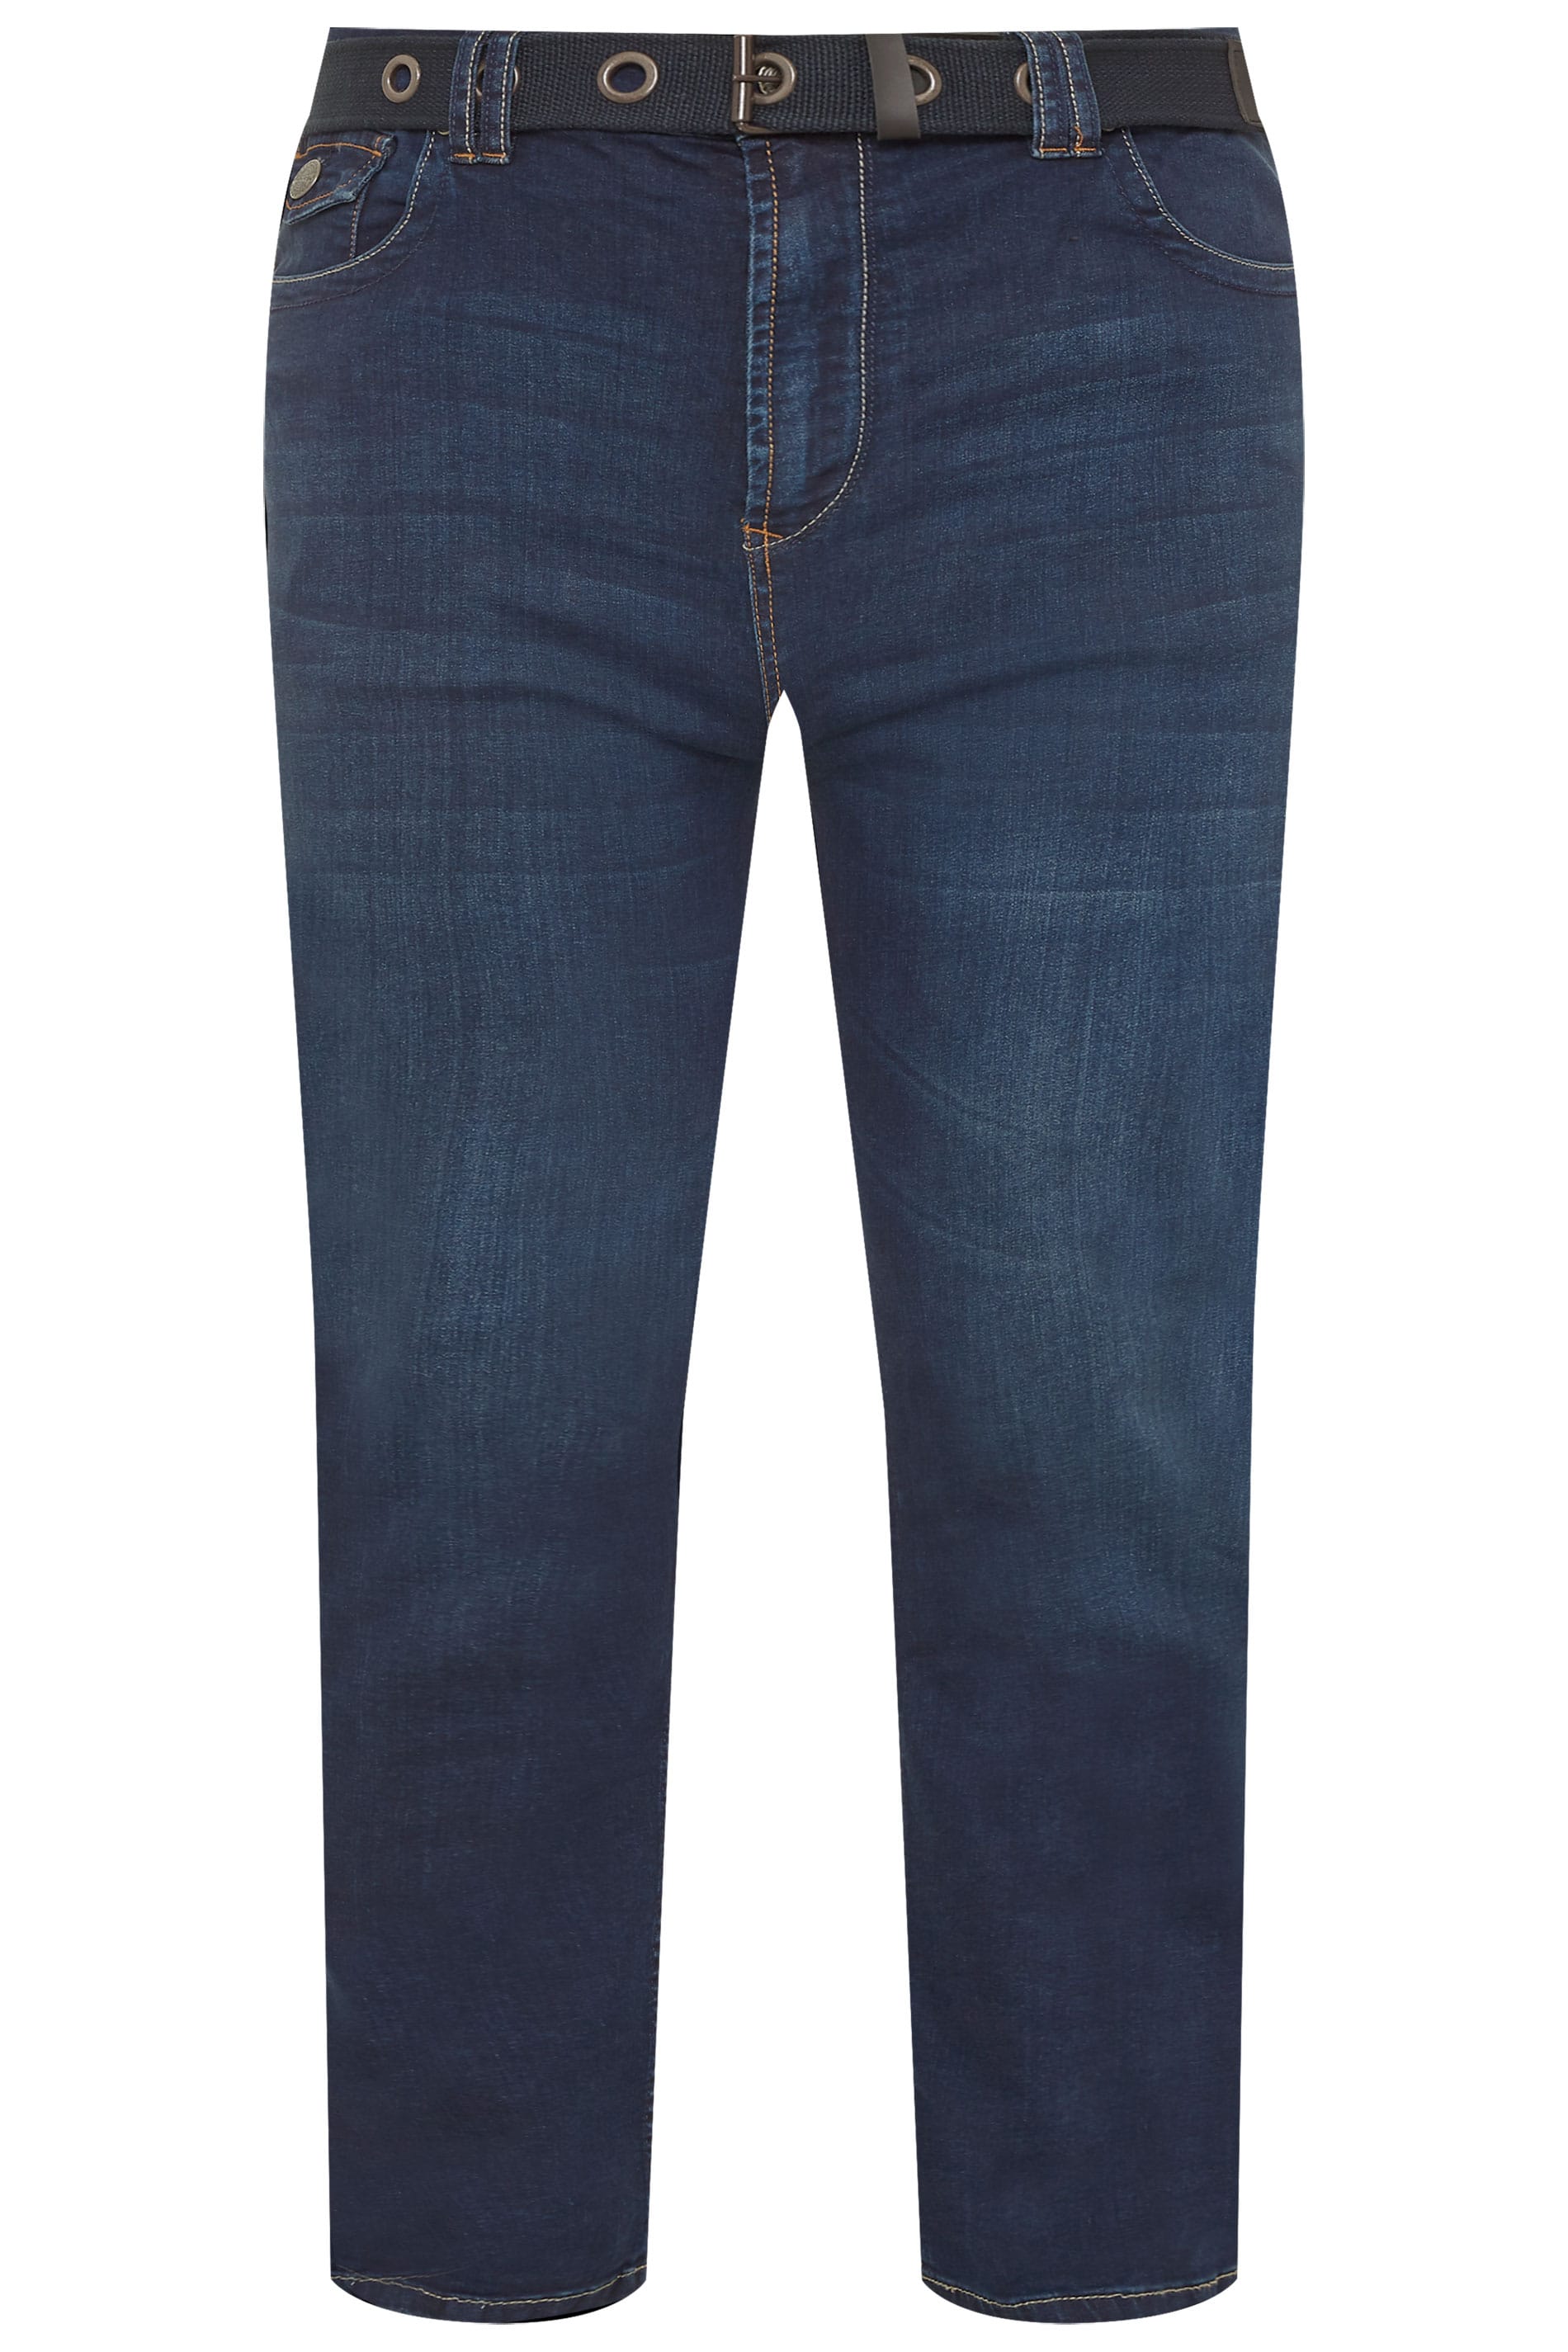 KAM Washed Indigo Blue Regular Fit Stretch Jeans | BadRhino 1